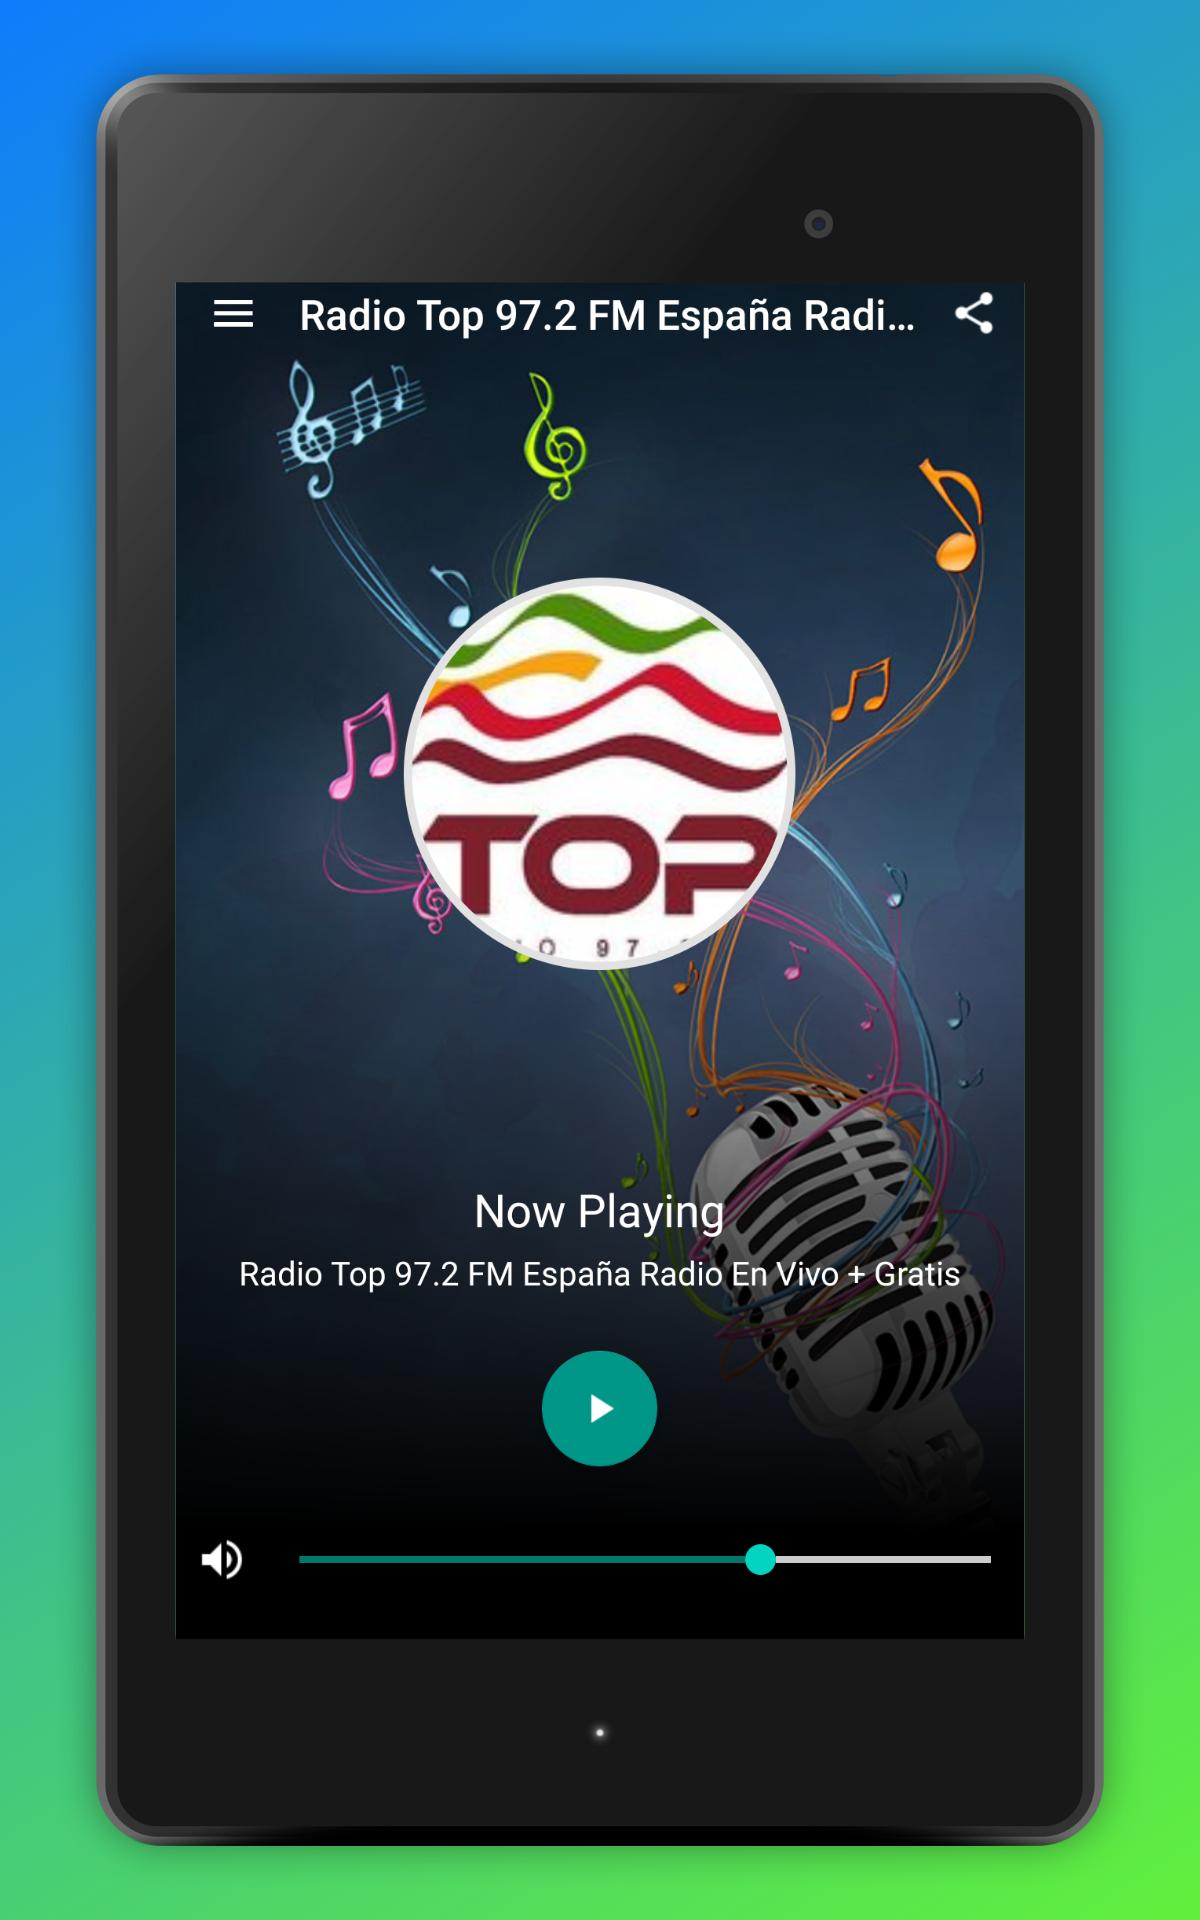 Radio Top 97.2 FM España Radio En Vivo + Gratis APK pour Android Télécharger